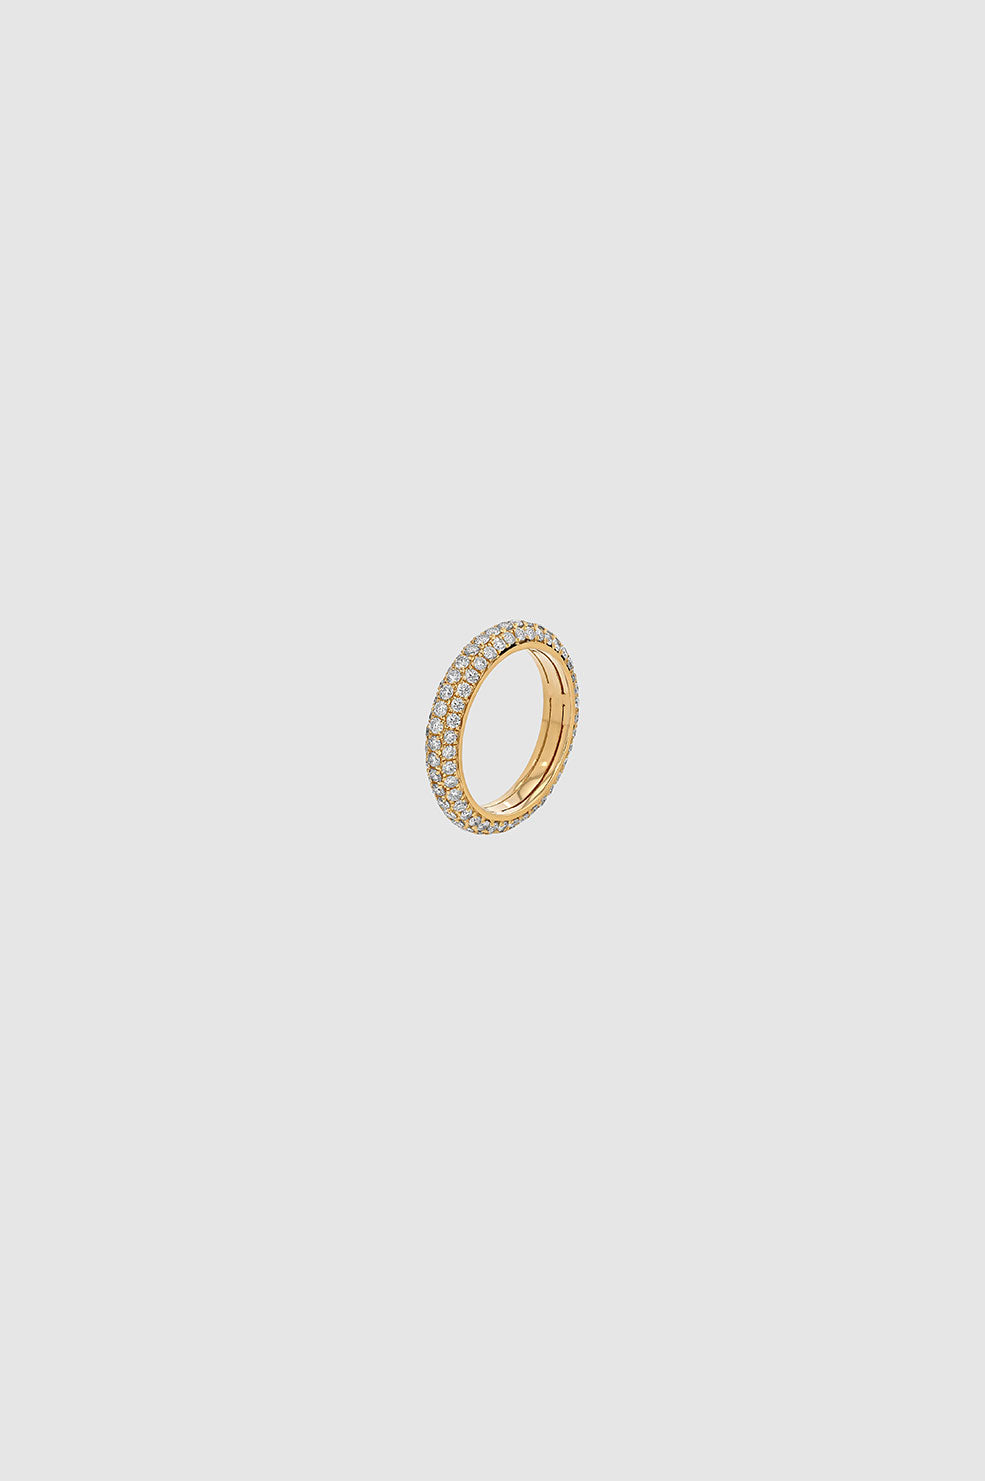 Delicate Diamond Pinky Ring - 14k Gold